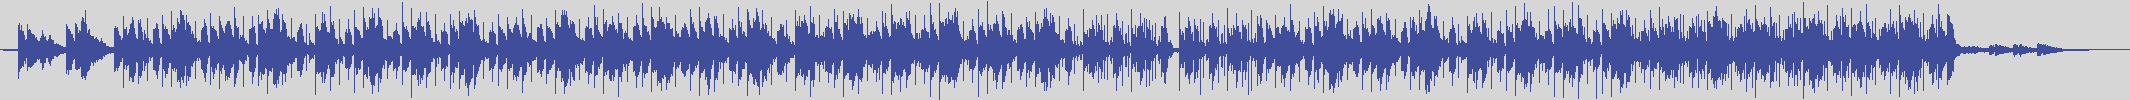 noclouds_chillout [NOC037] Diapason - Wasting Time [Original Mix] audio wave form